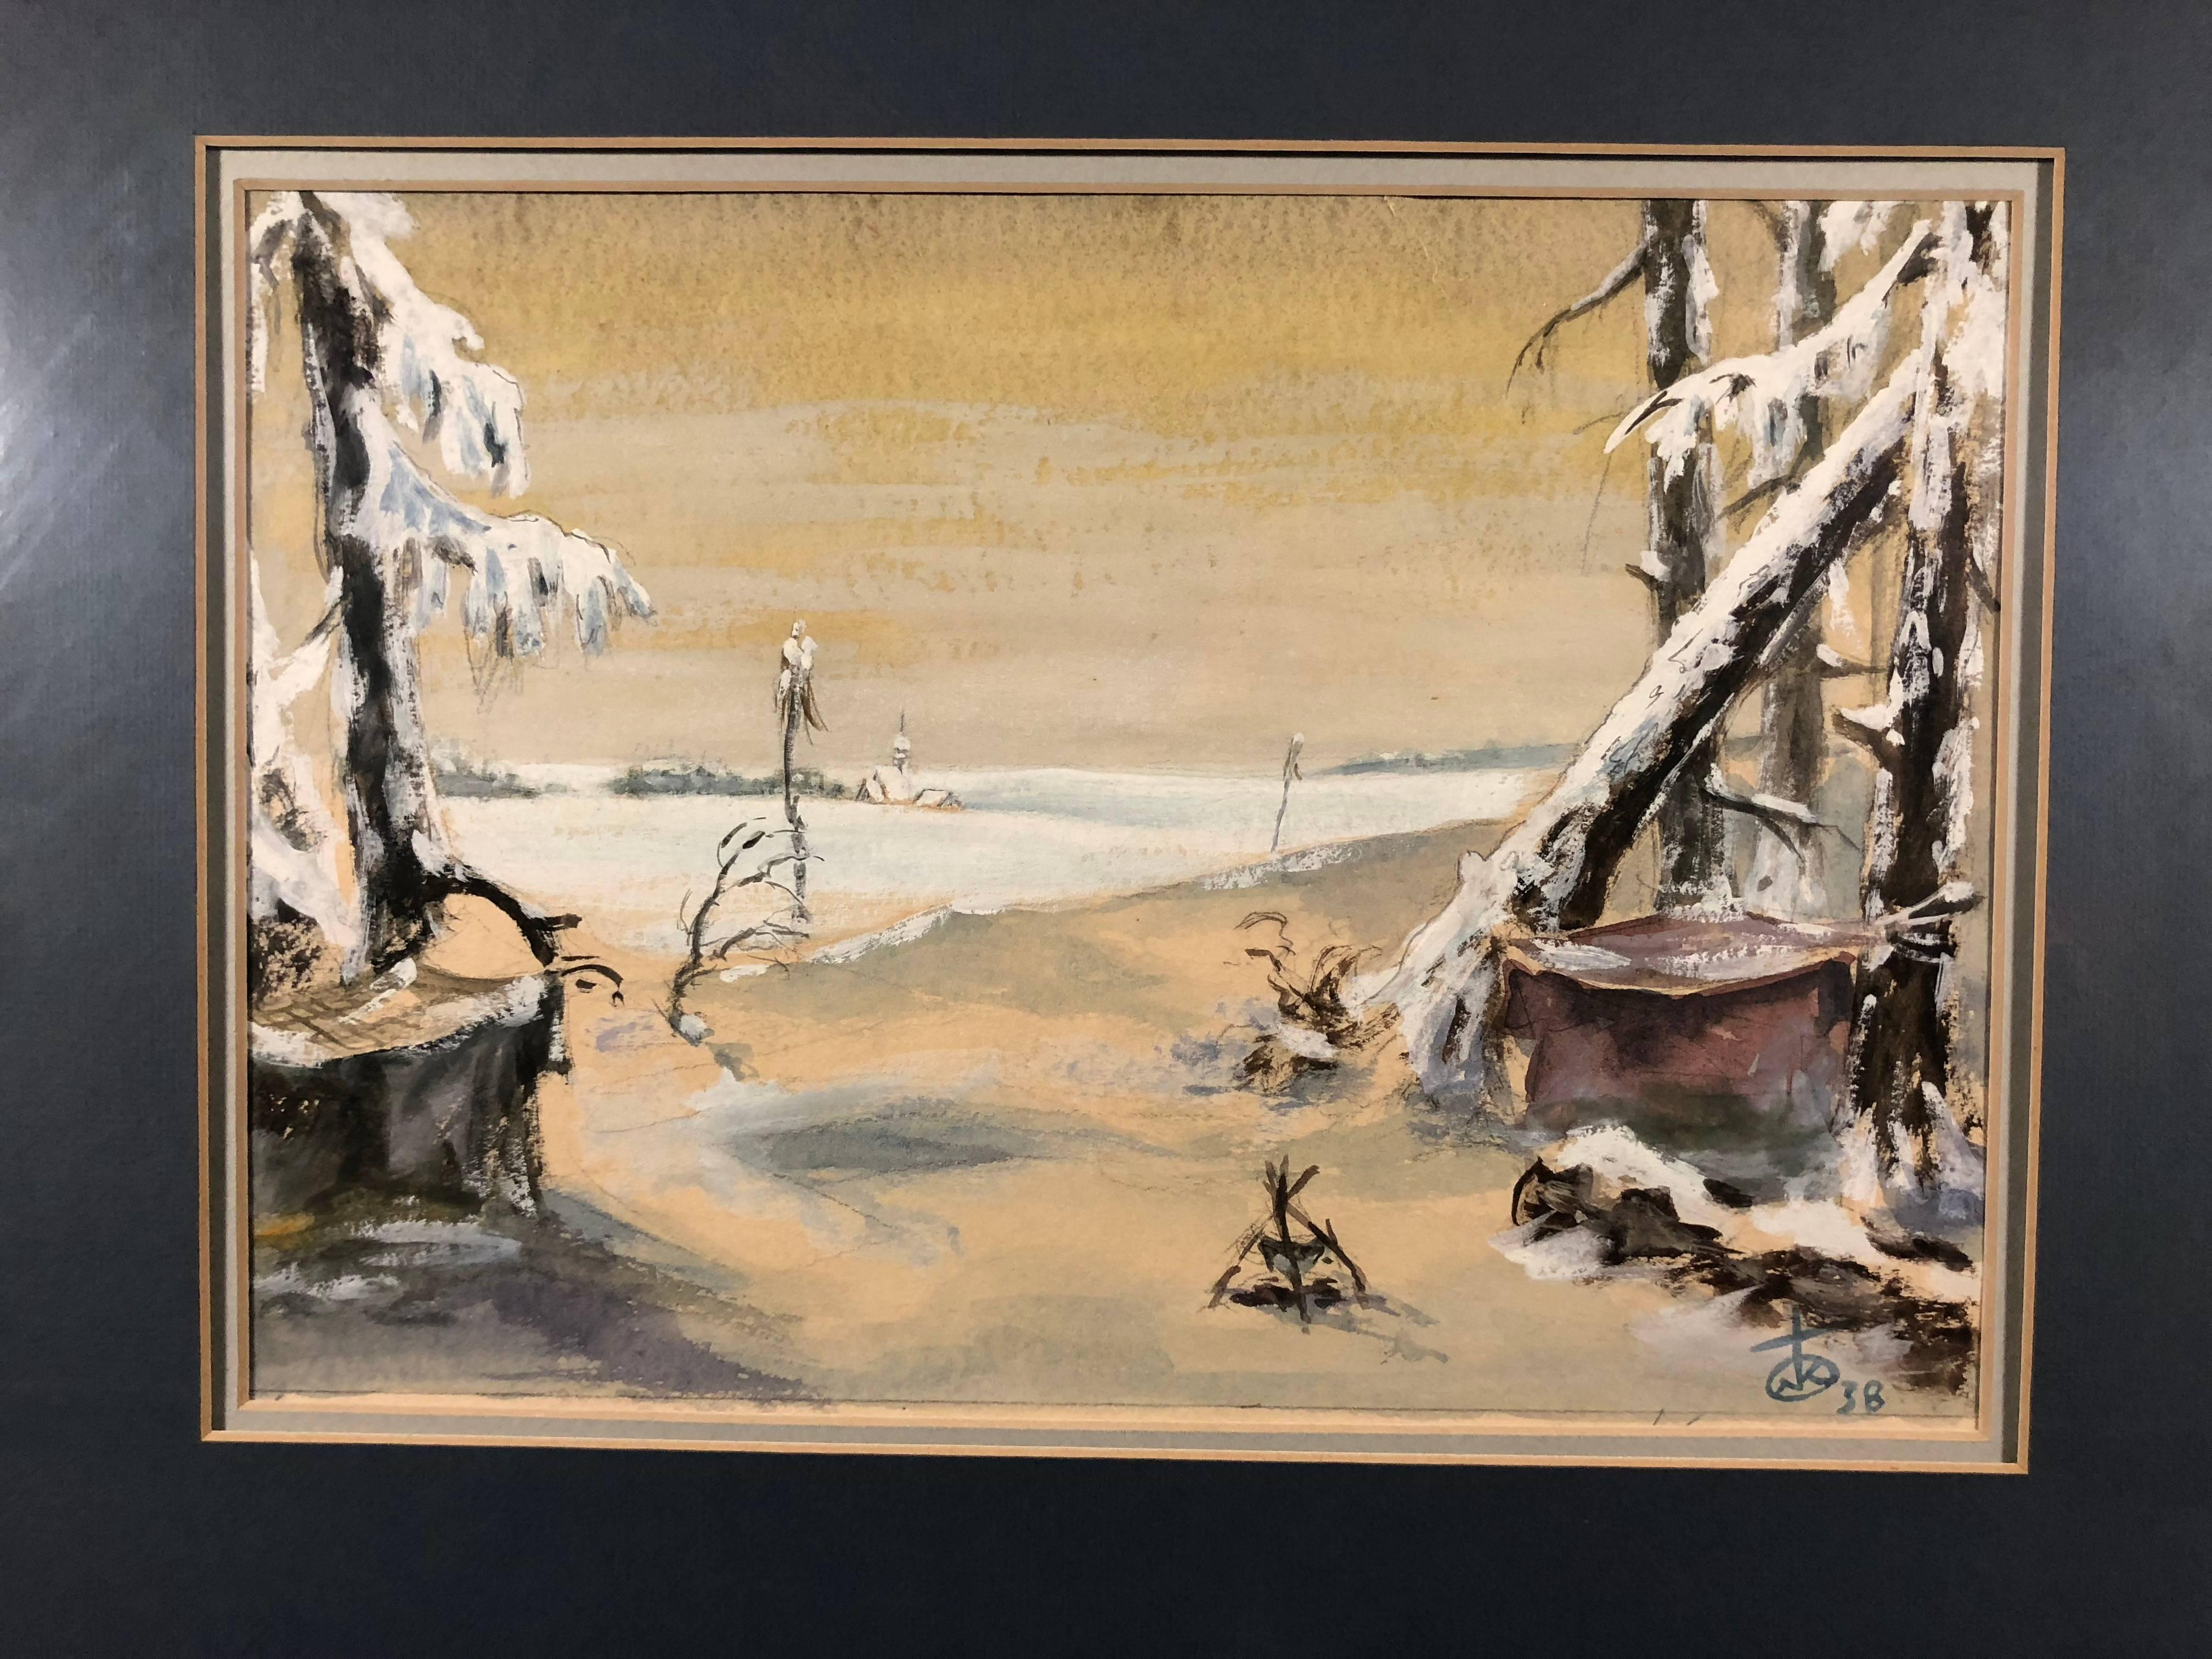 Unknown Landscape Art - Winter Landscape 1938